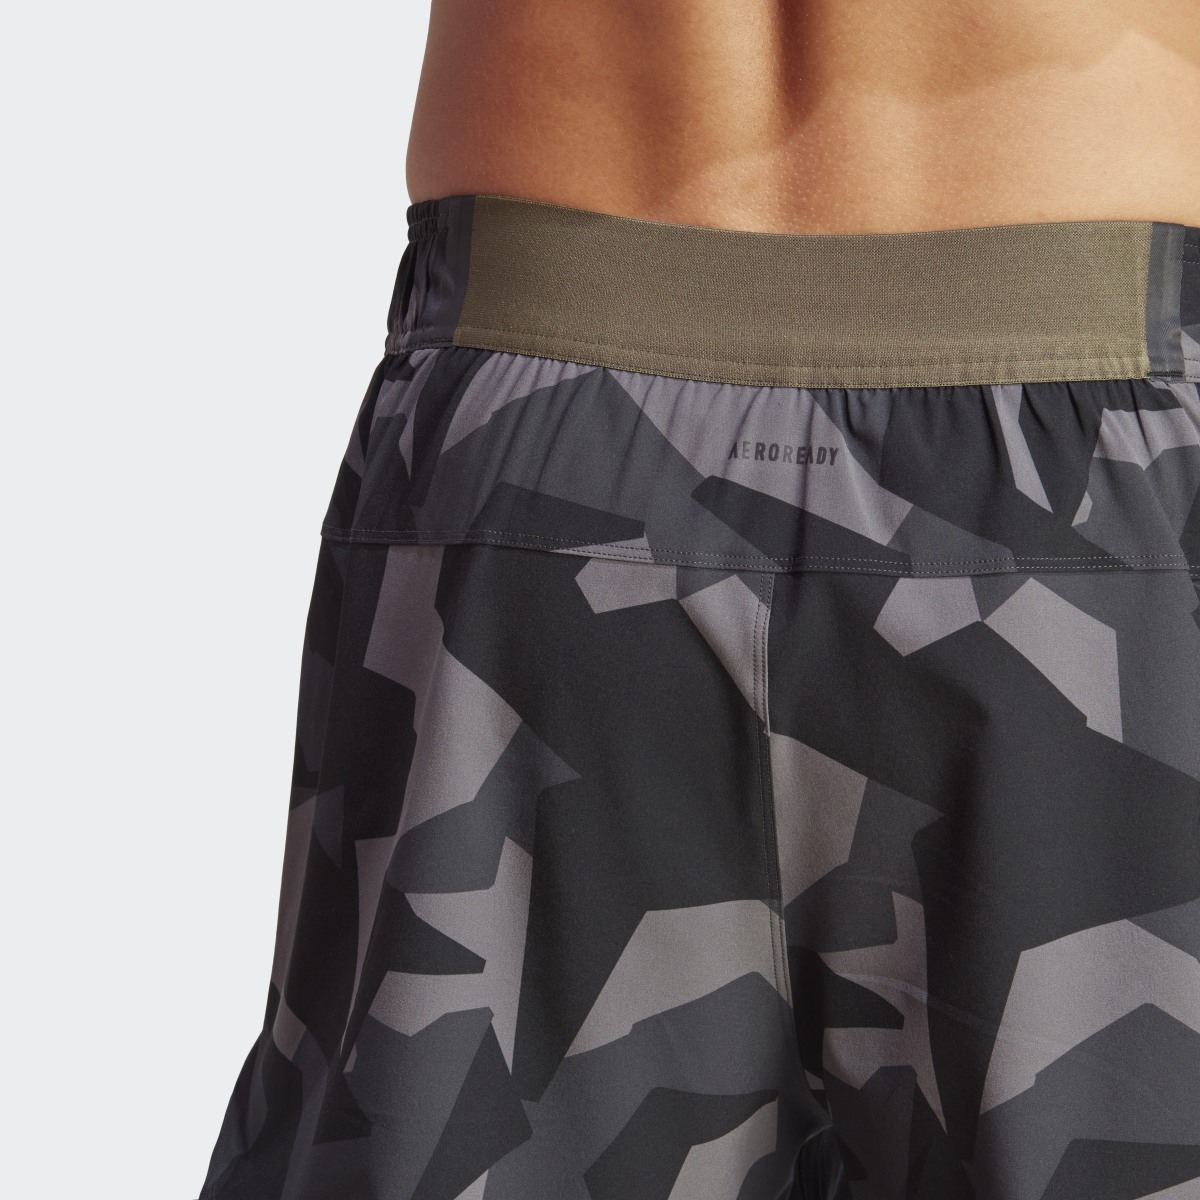 Adidas Designed for Training Pro Series Strength Shorts. 8